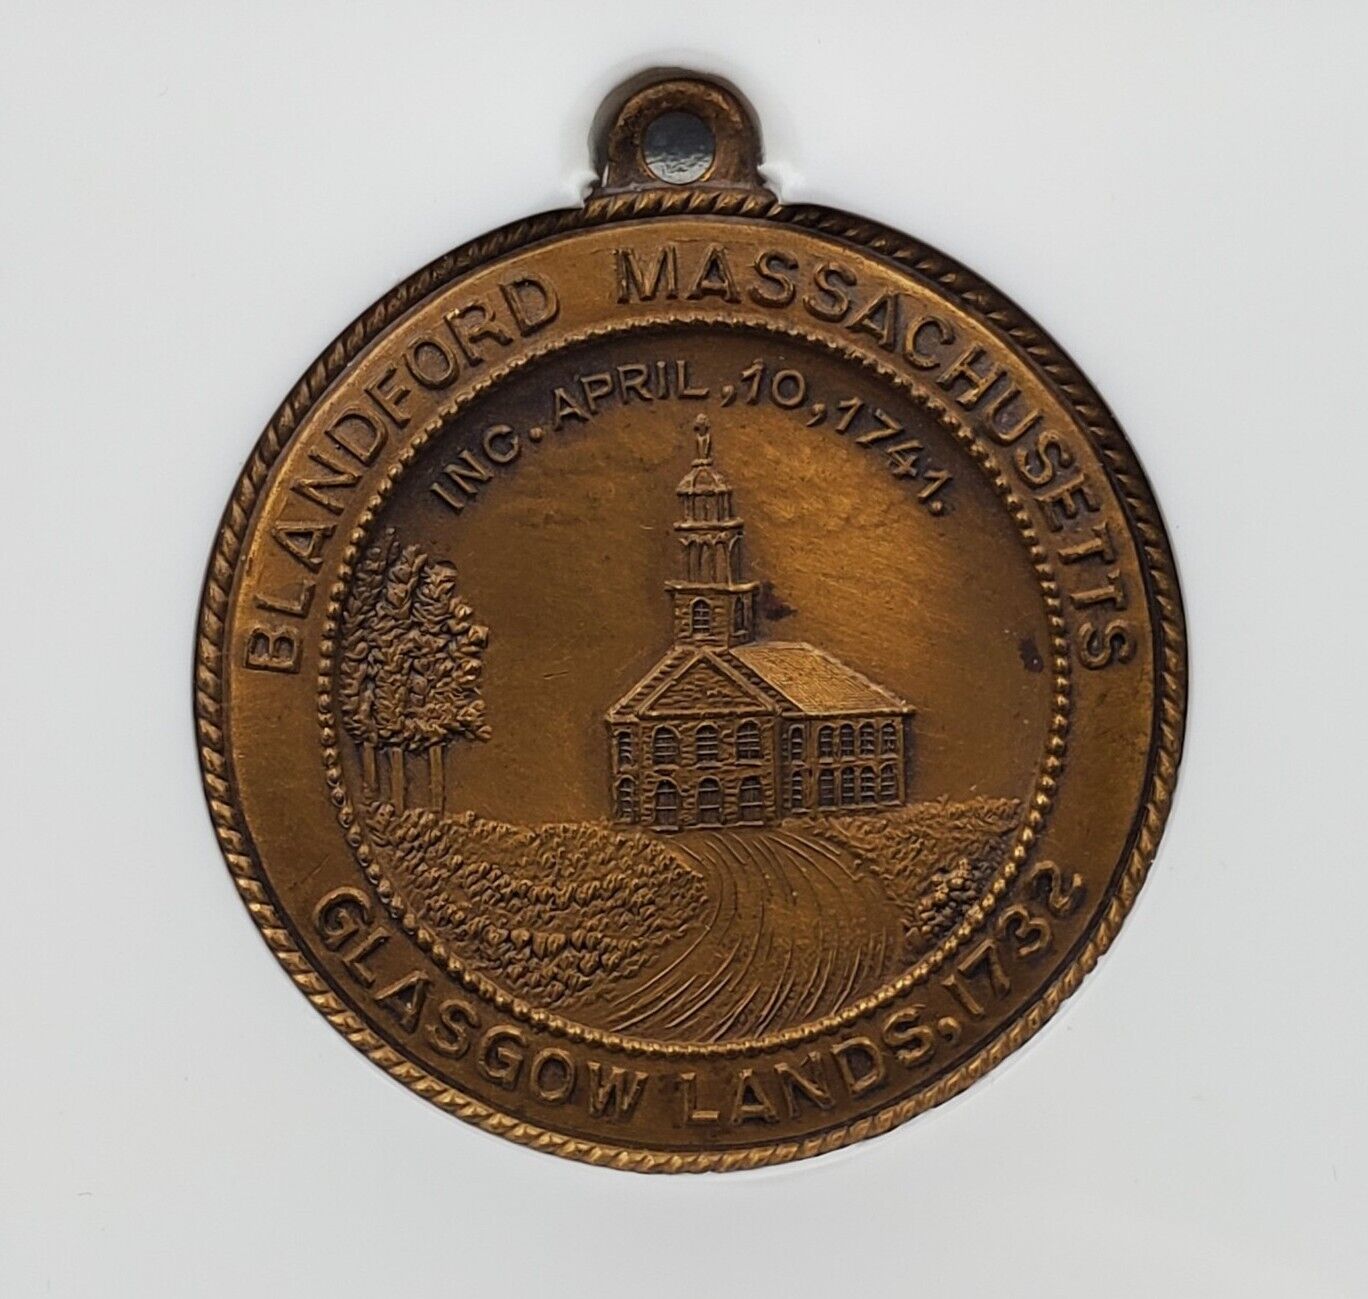 1935 MA Blandford Bicentennial AE 31.5 mm NGC medal MS65